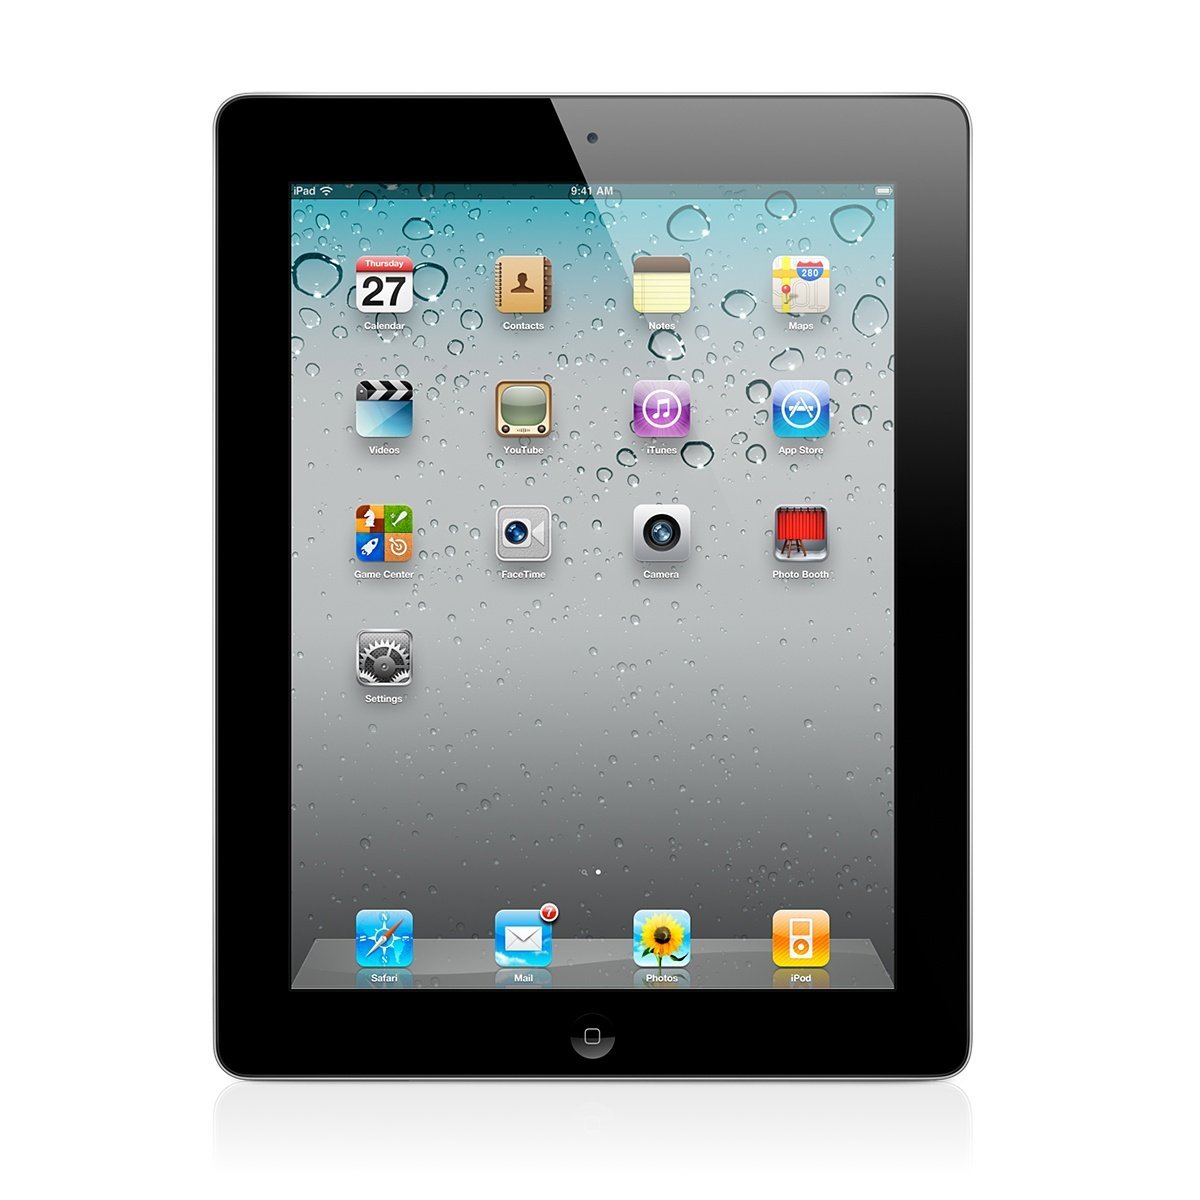 Apple iPad 2 MC769LL/A 9.7-Inch 16GB (Black) 1395 – Certified Refurbished